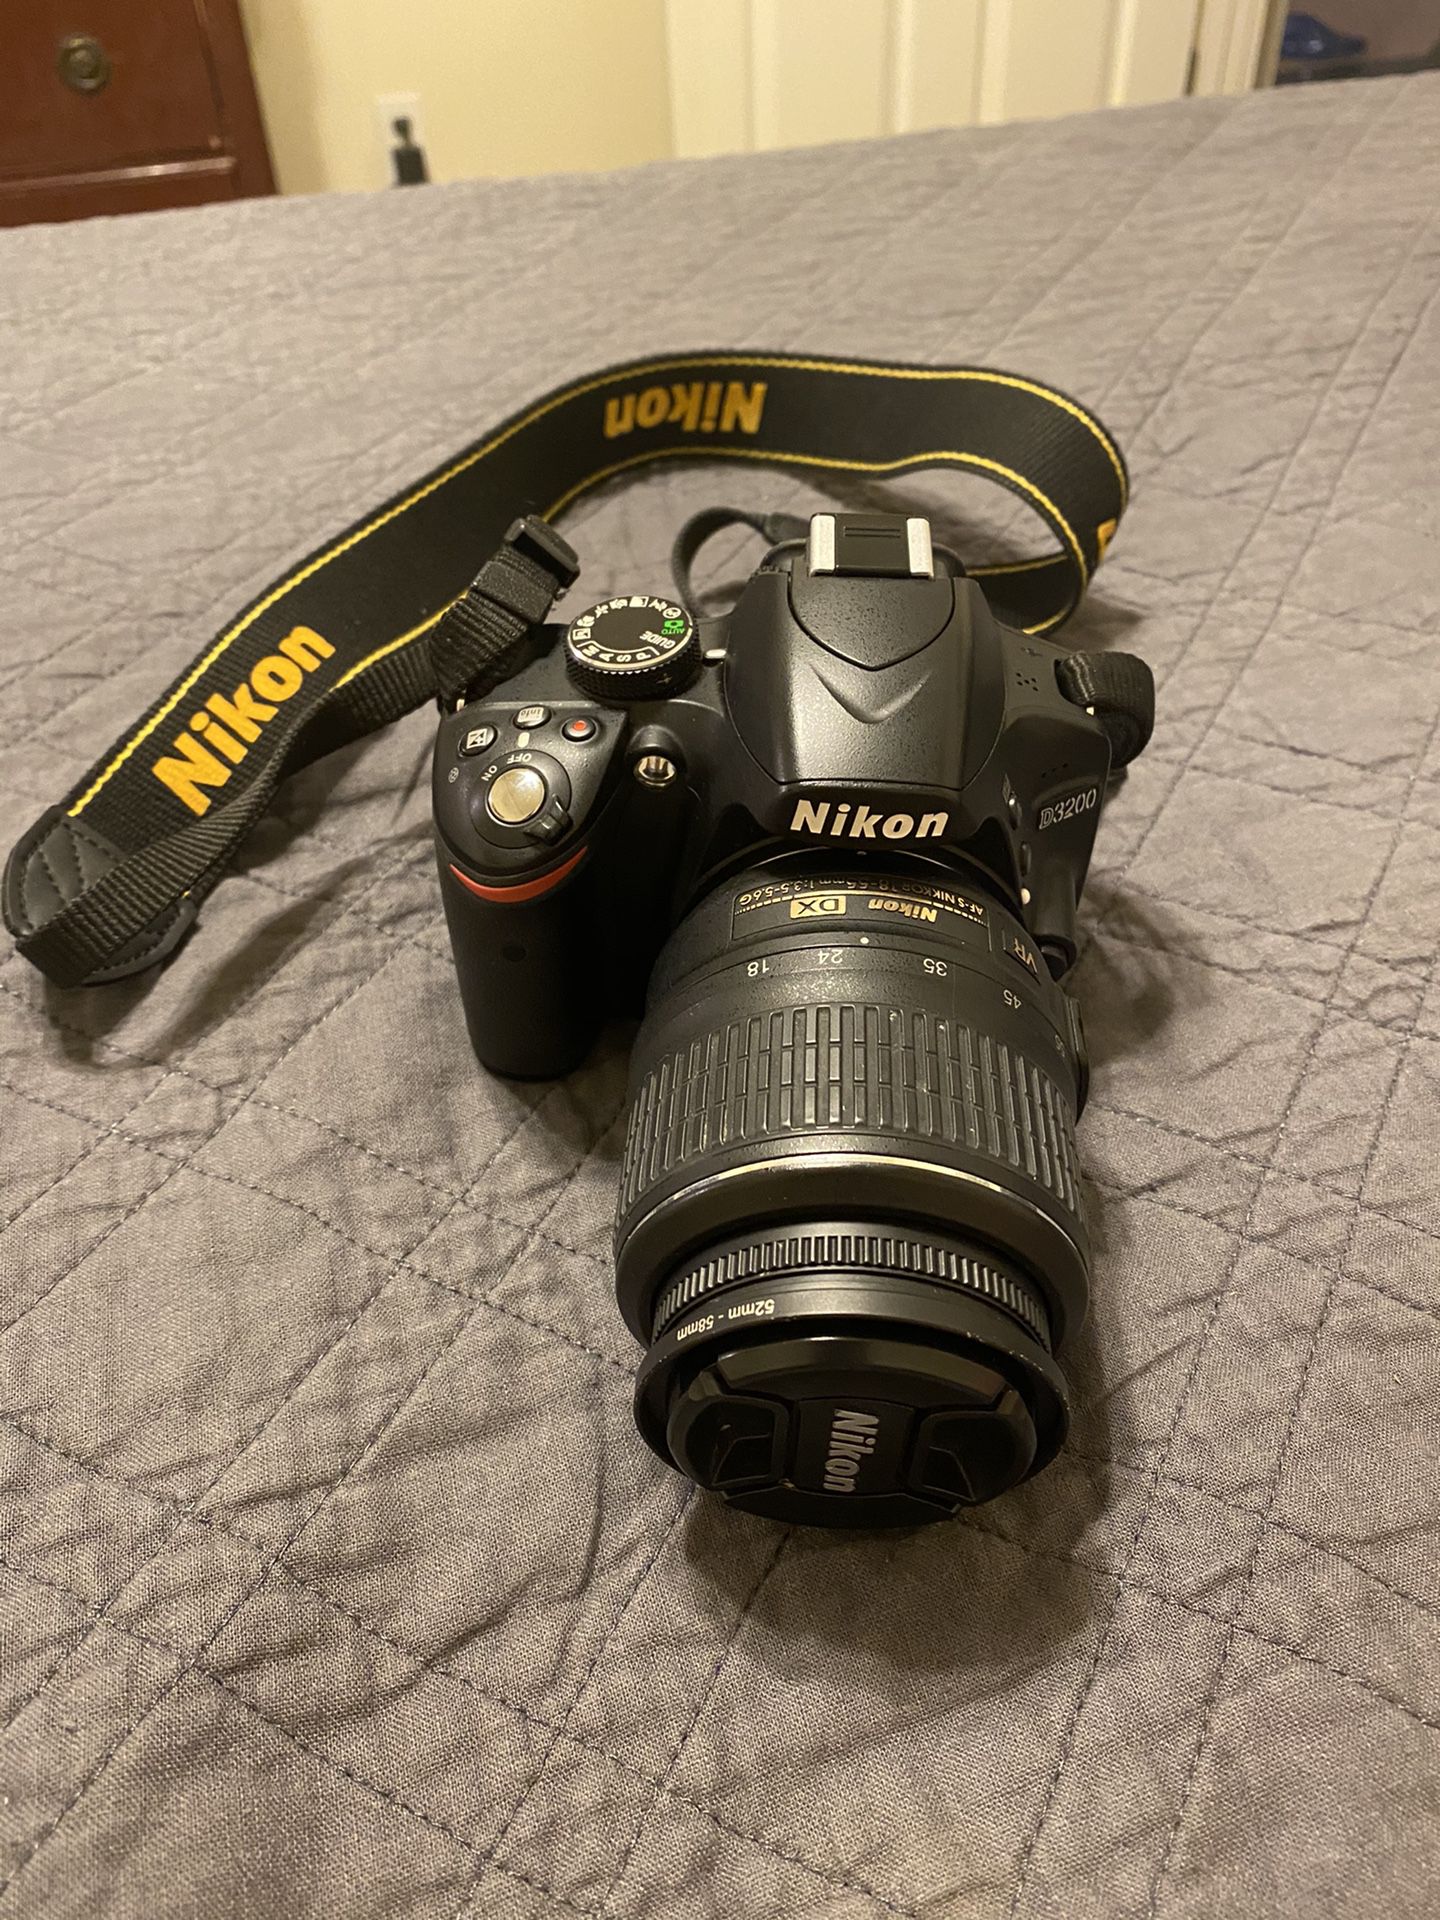 Nikon D3200 digital camera